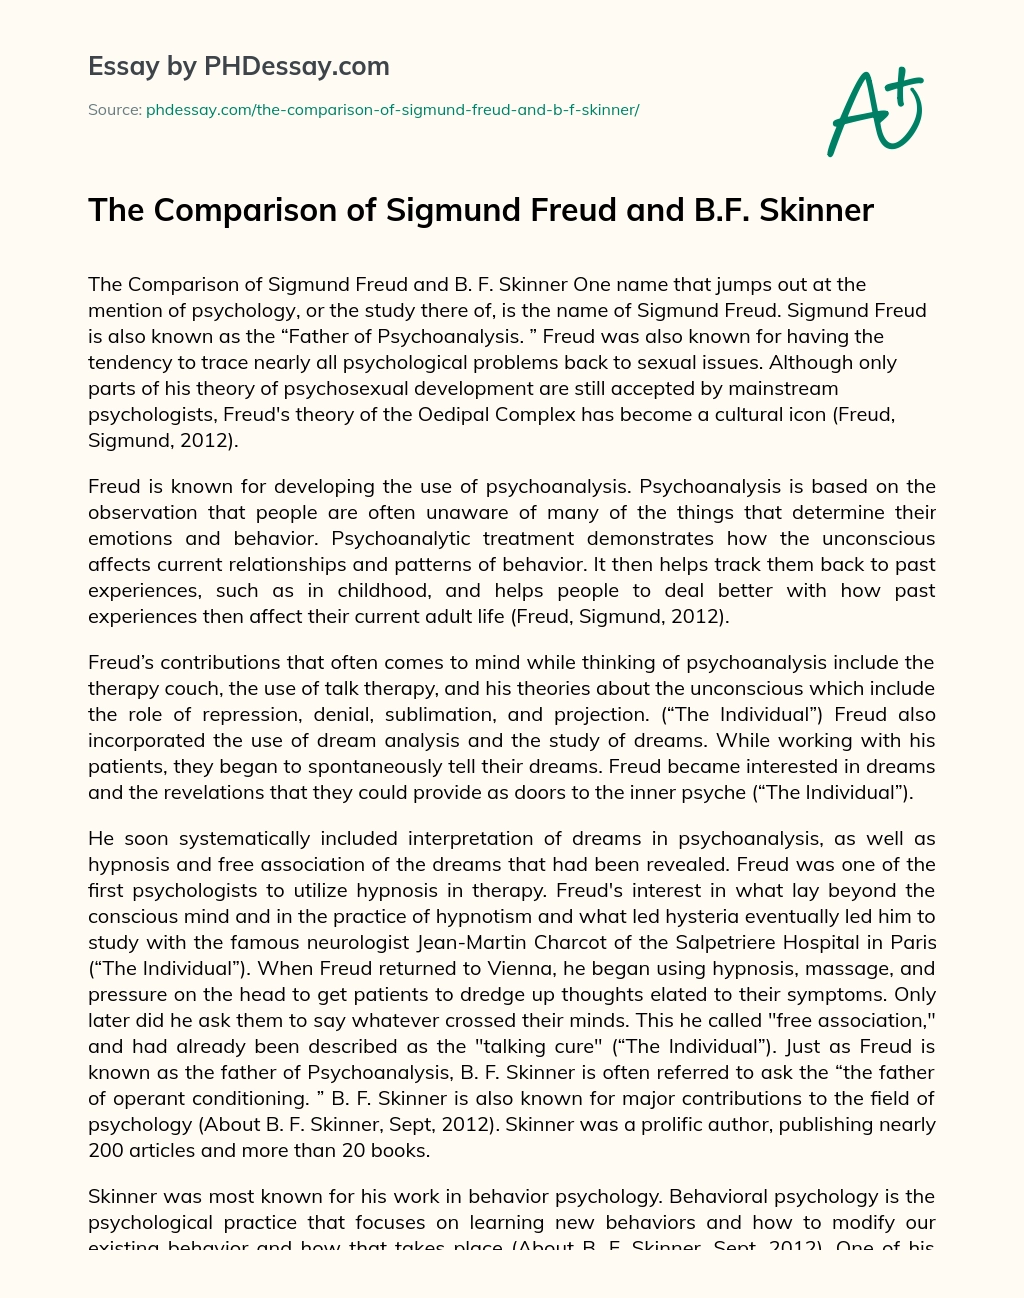 The Comparison of Sigmund Freud and B.F. Skinner essay